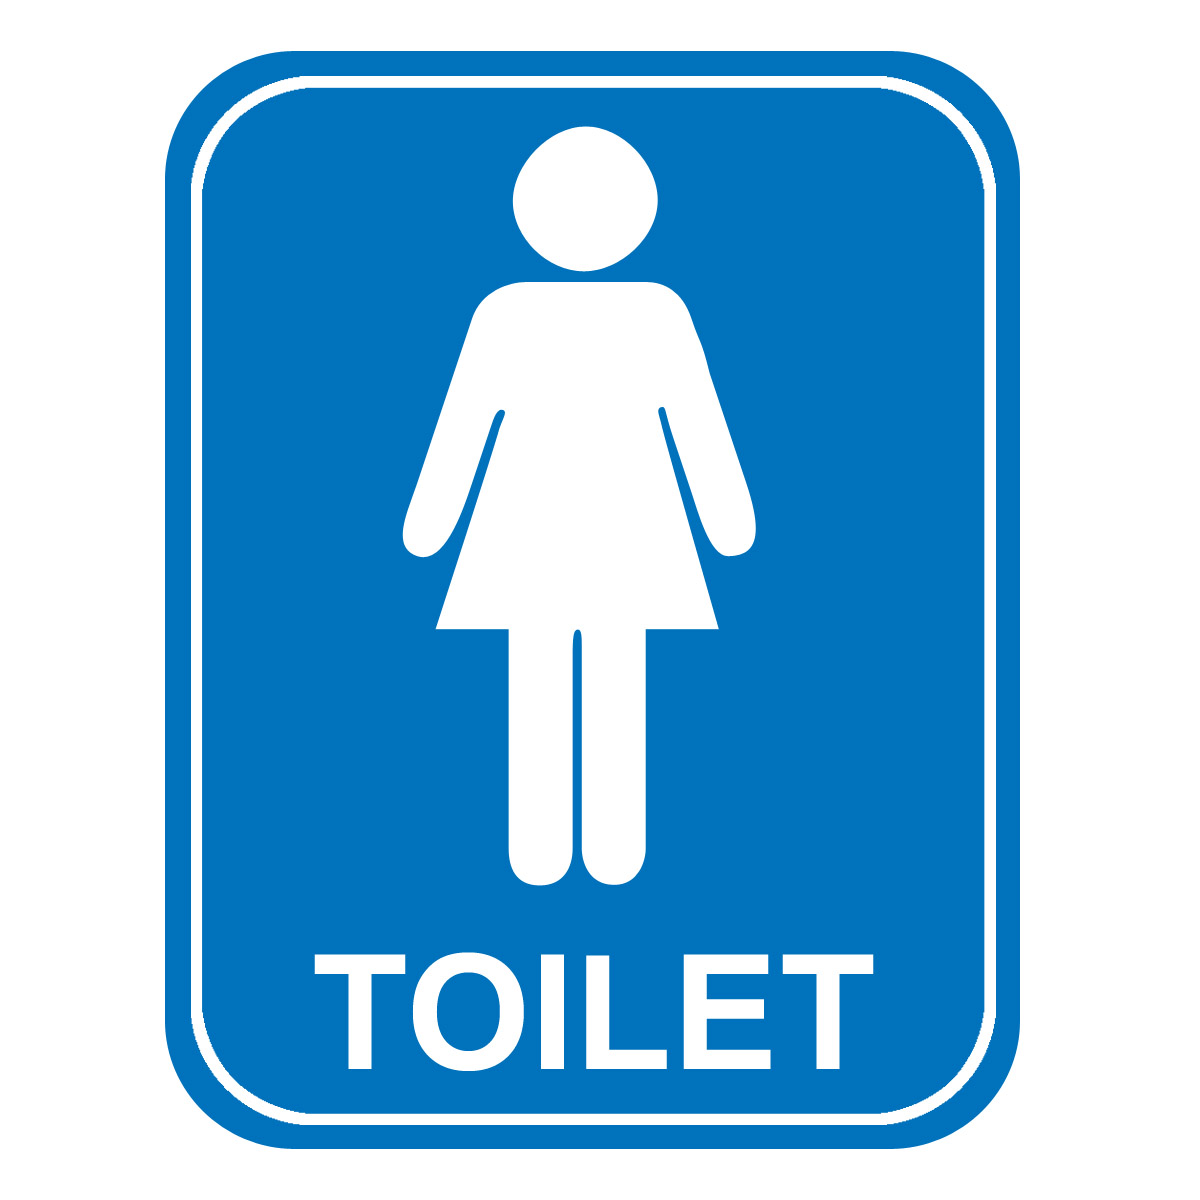 Ladies toilet sign | Clipart Nepal